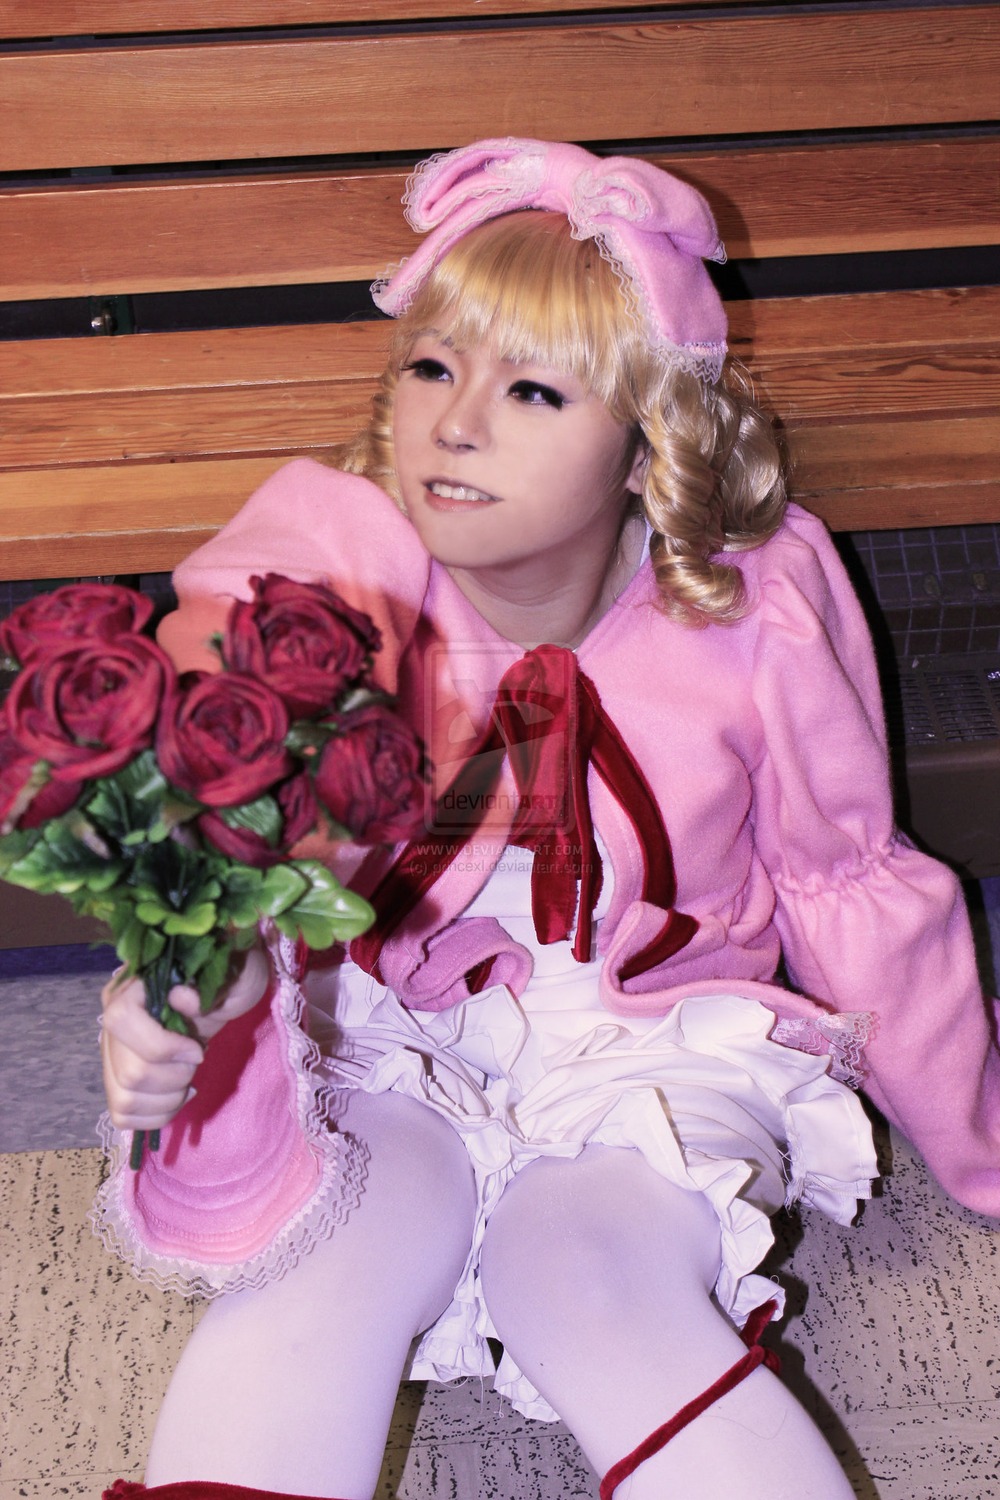 1girl blonde_hair bloomers bouquet dress flower hat hinaichigo pink_dress red_flower red_rose rose sitting solo underwear